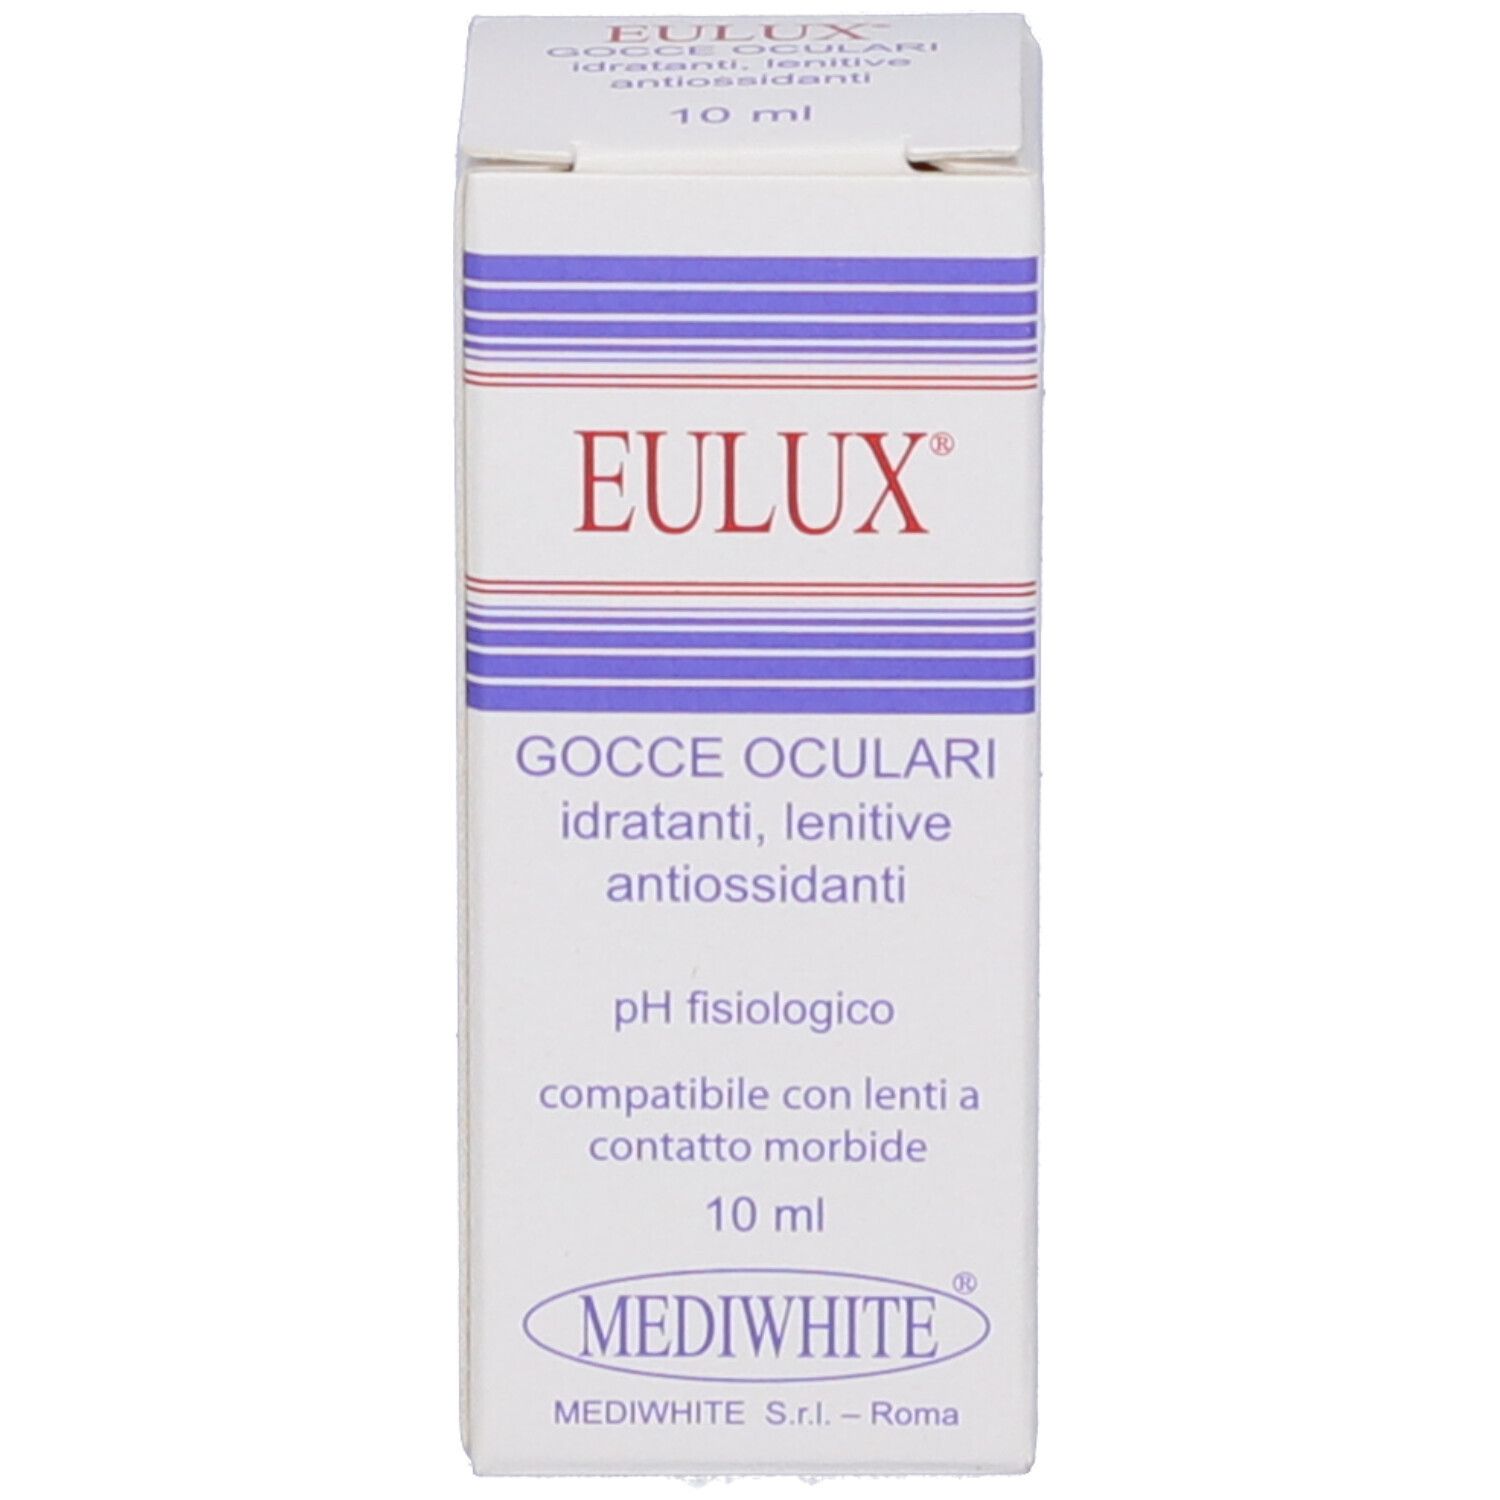 EULUX® Gocce oculari idratanti, lenitive antiossidanti